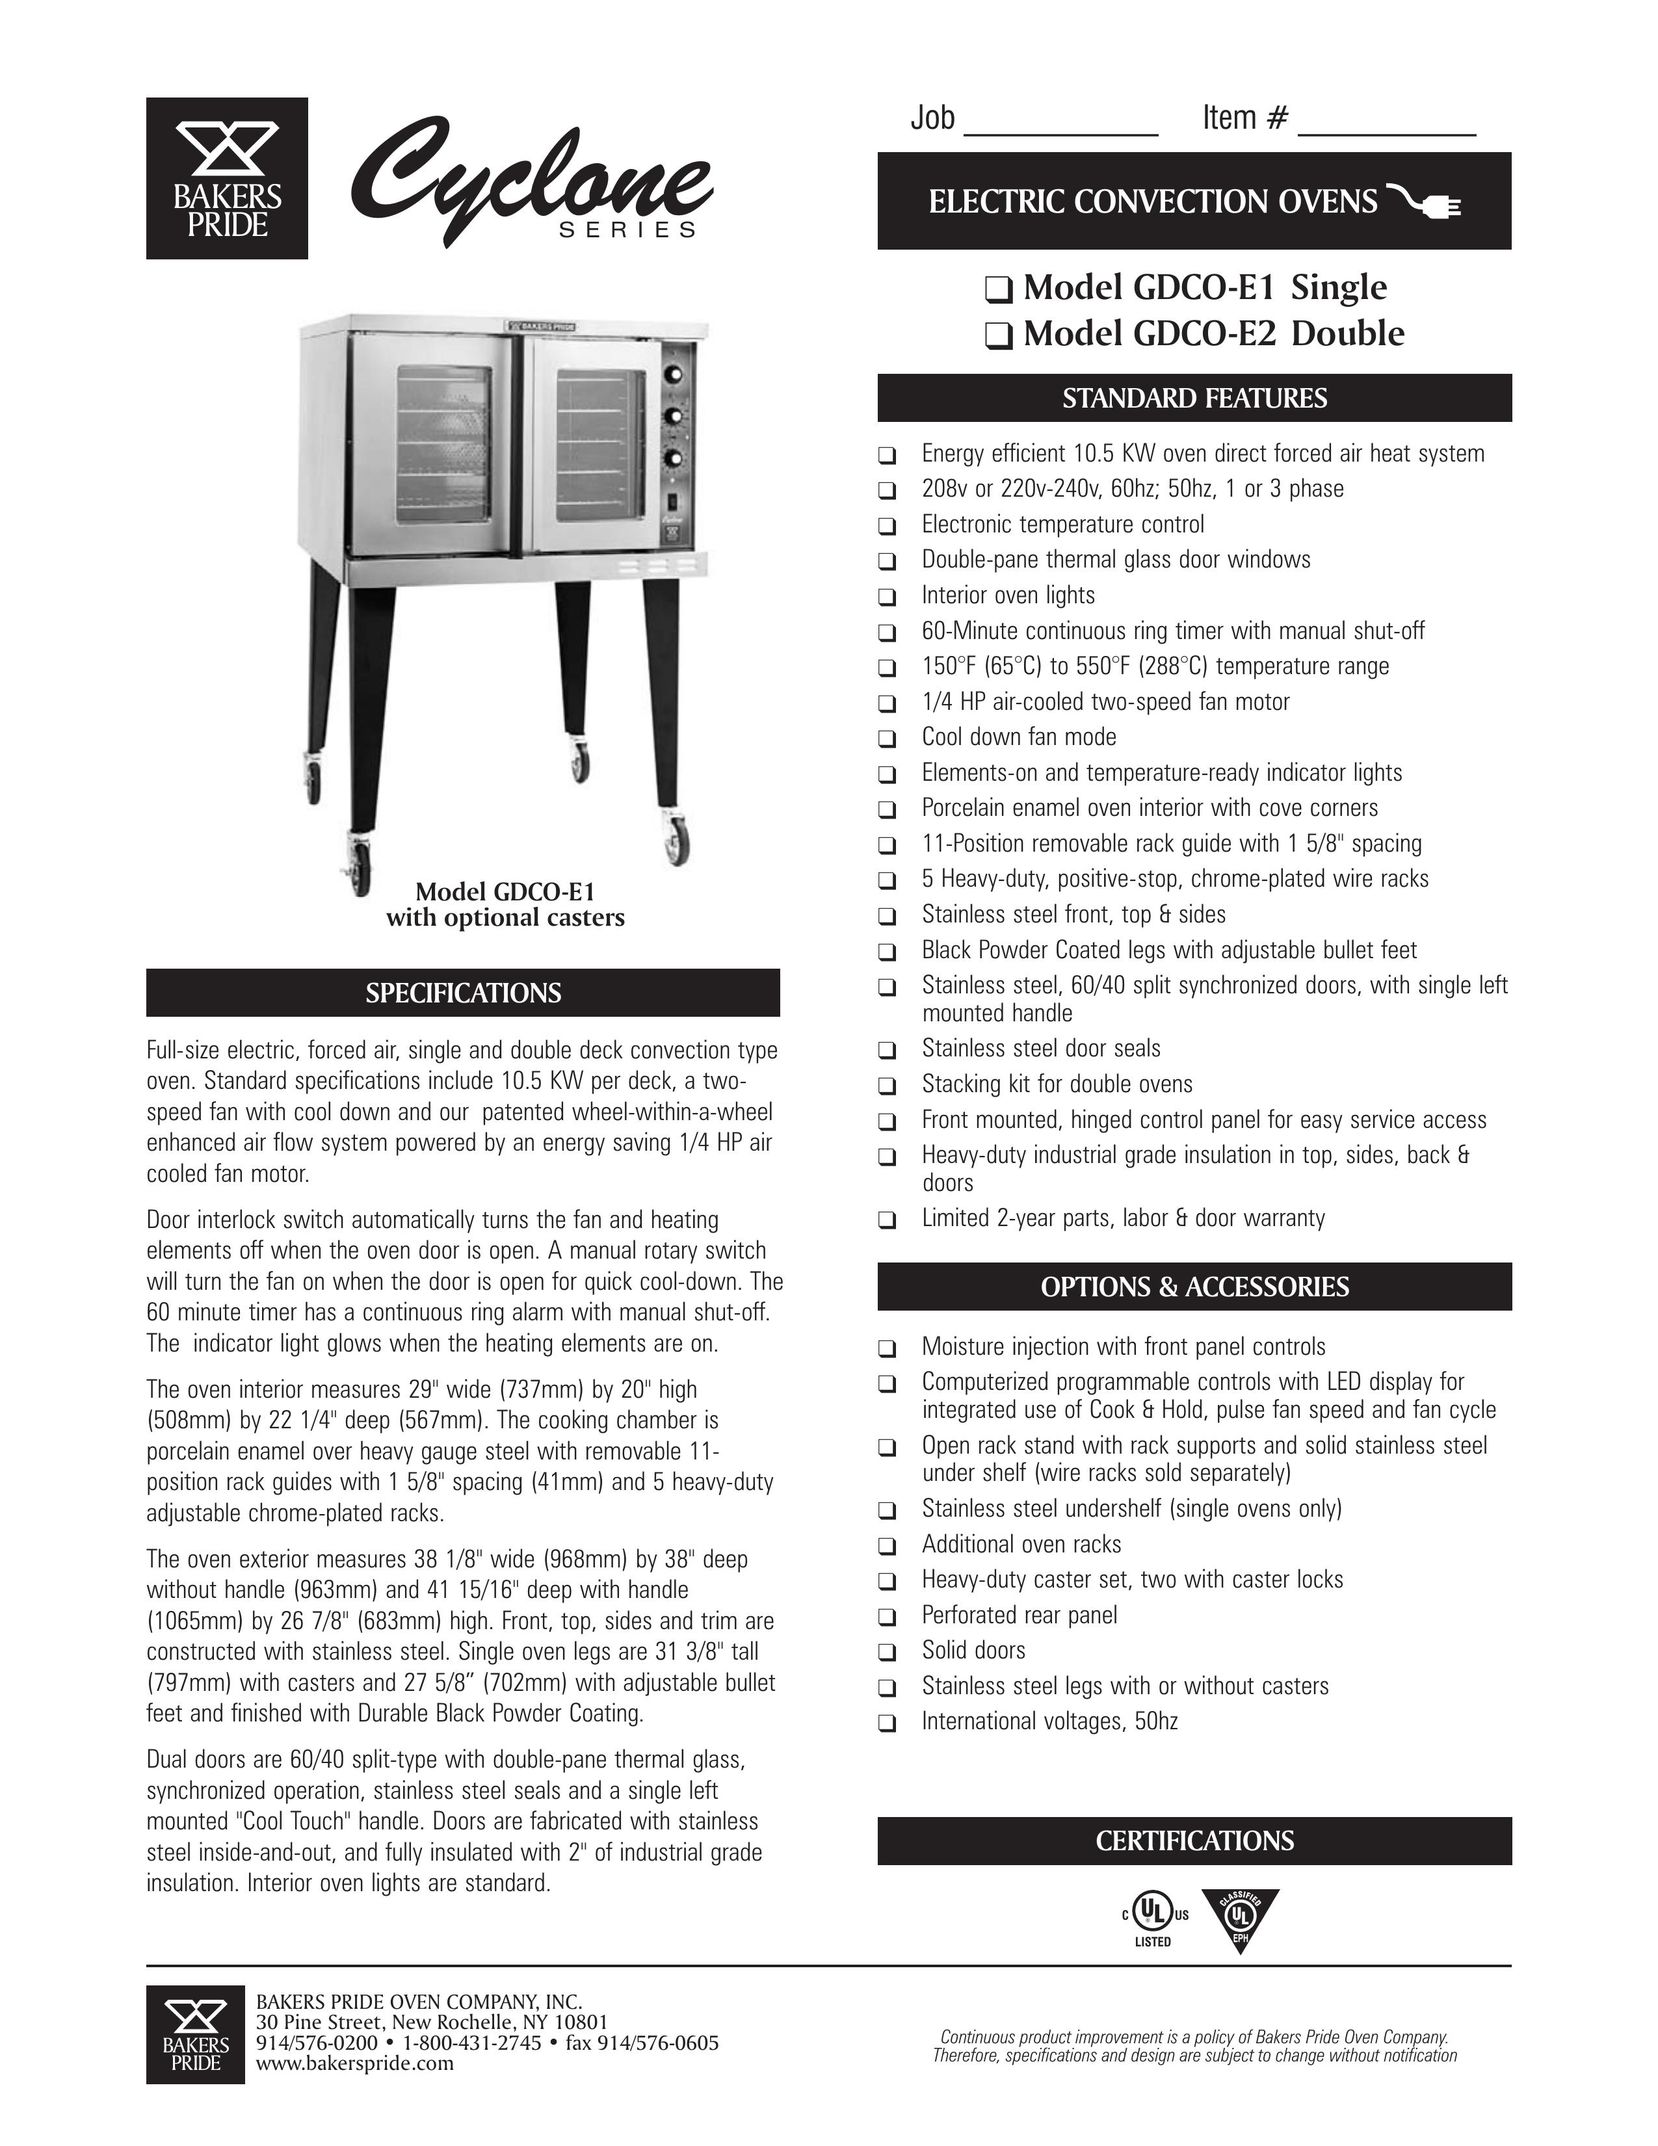 Bakers Pride Oven GDCO-E1 Single Convection Oven User Manual